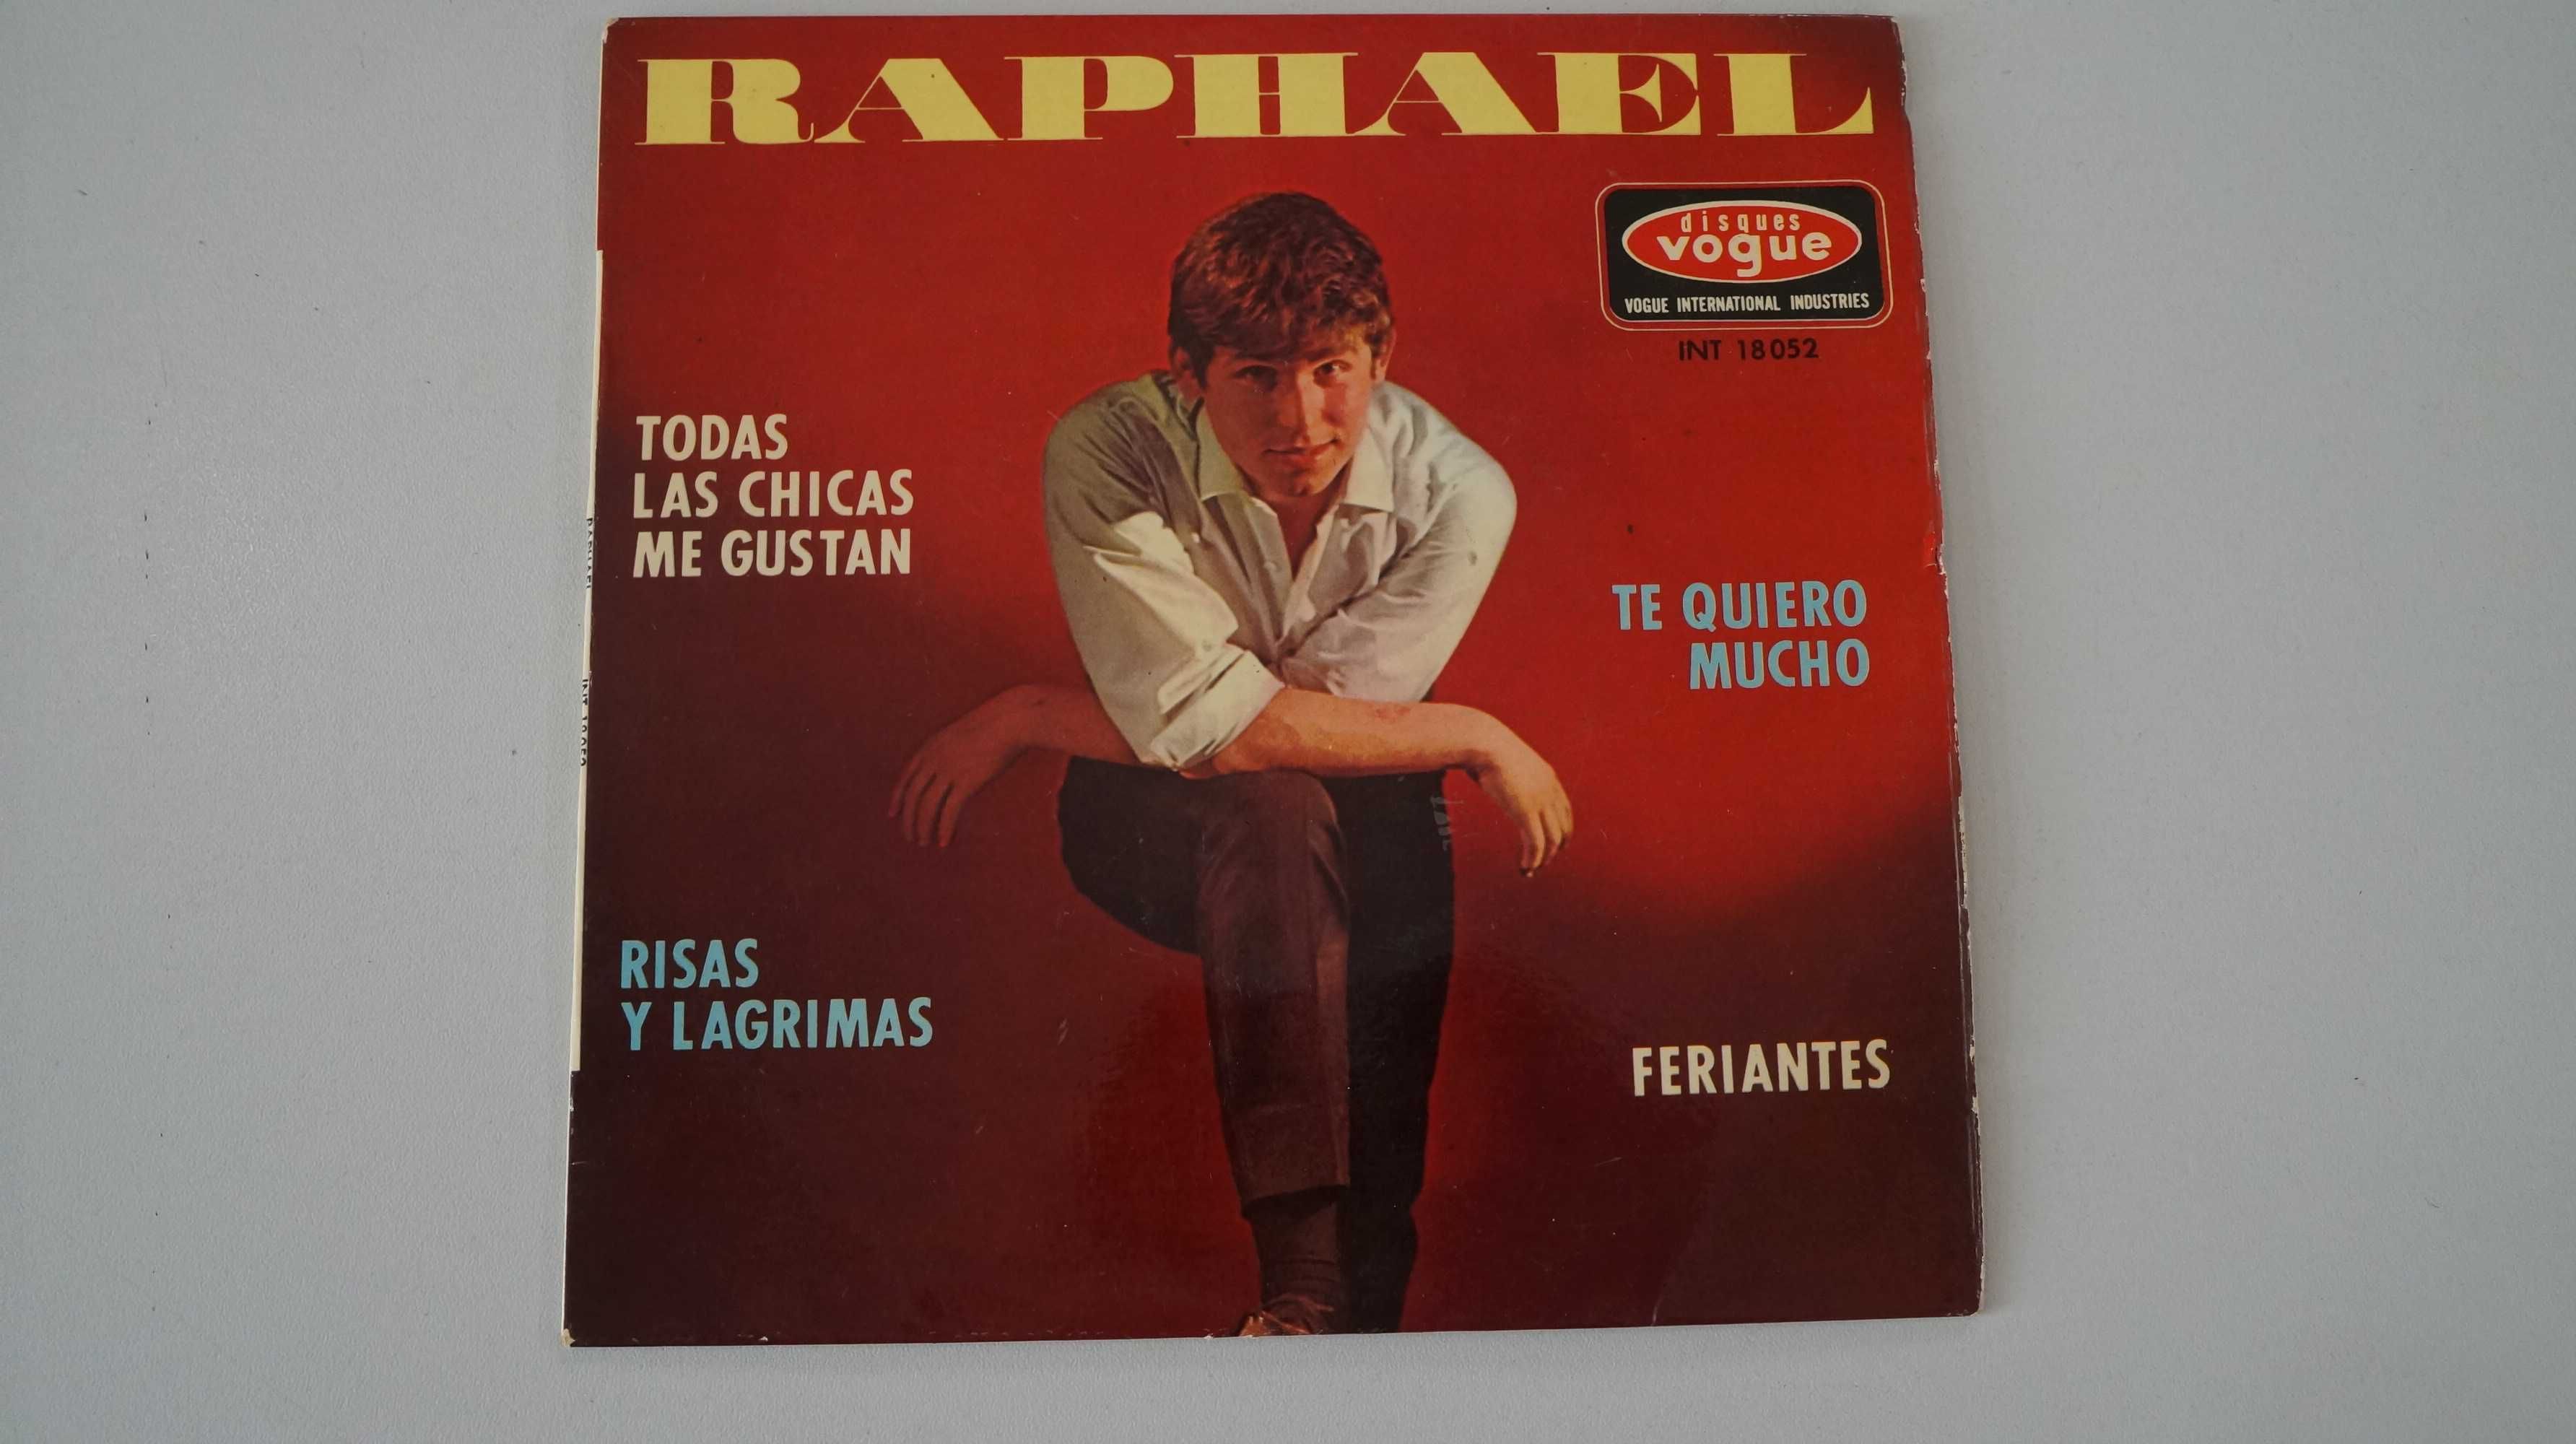 Disc (vinil) Raphael, anii 1960